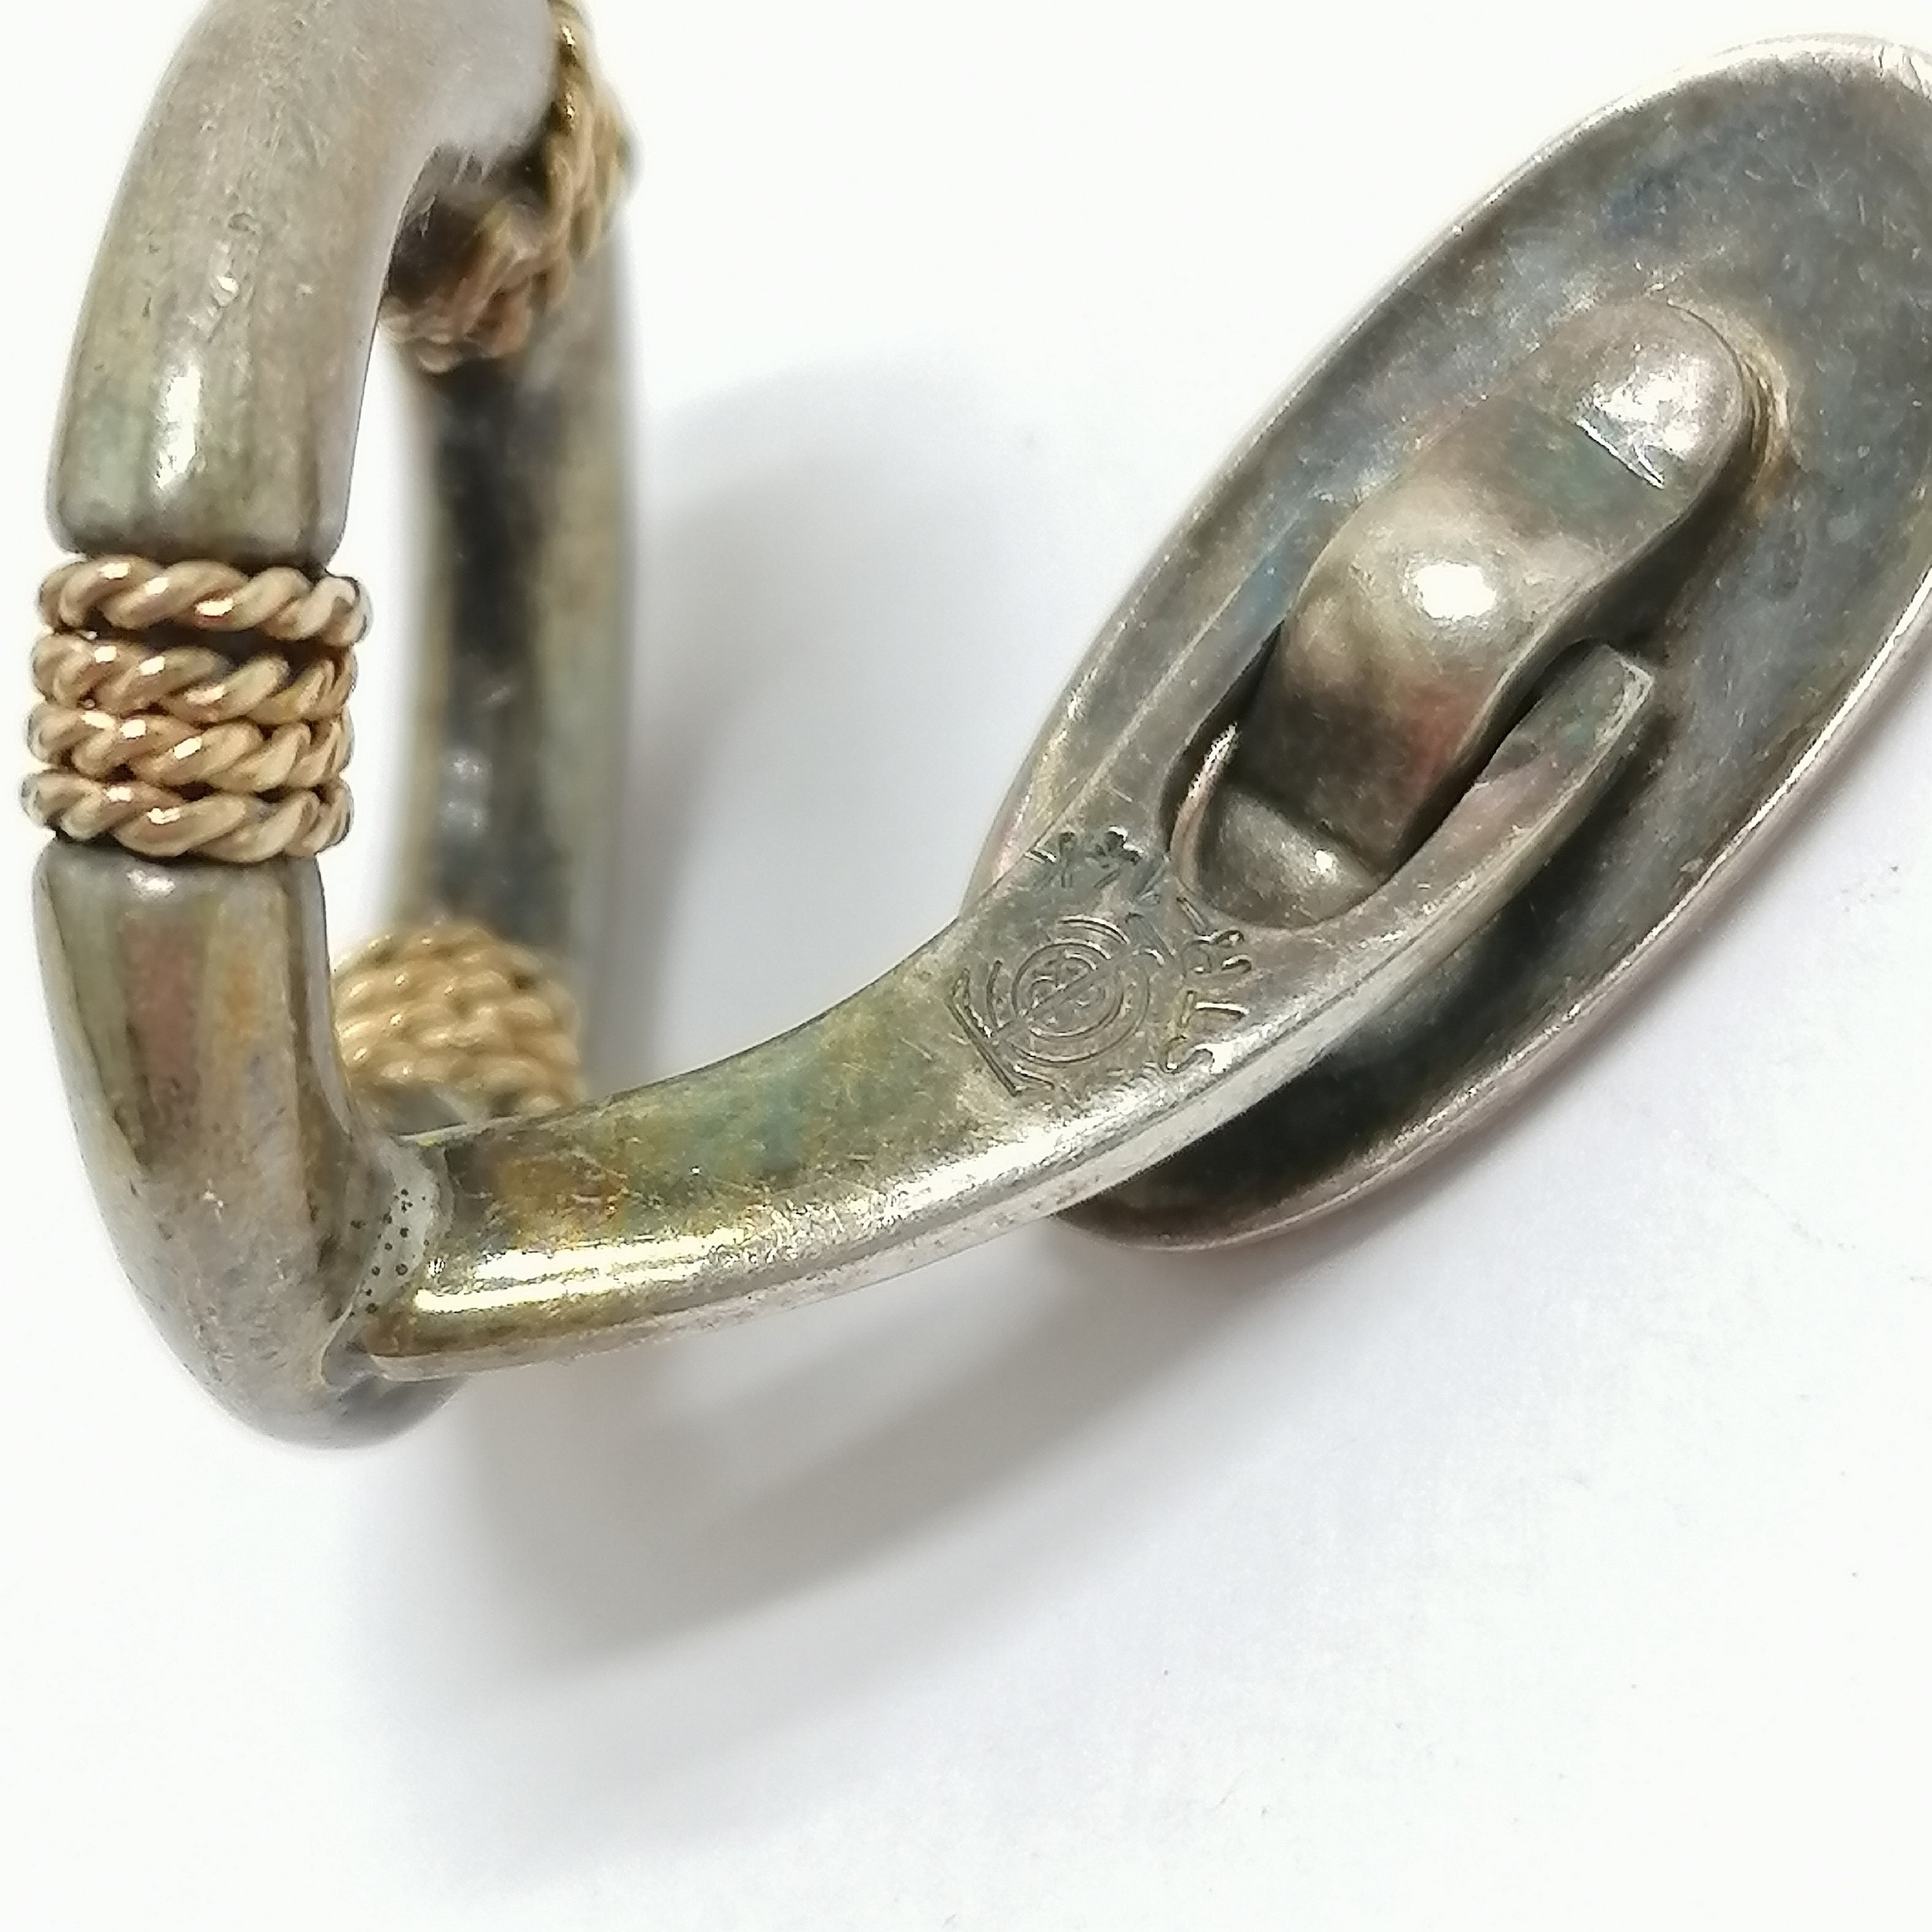 Tiffany & Co antique pair of silver / 14ct gold life preserver / lifebuoy cufflinks - 1.8cm diameter - Image 2 of 3